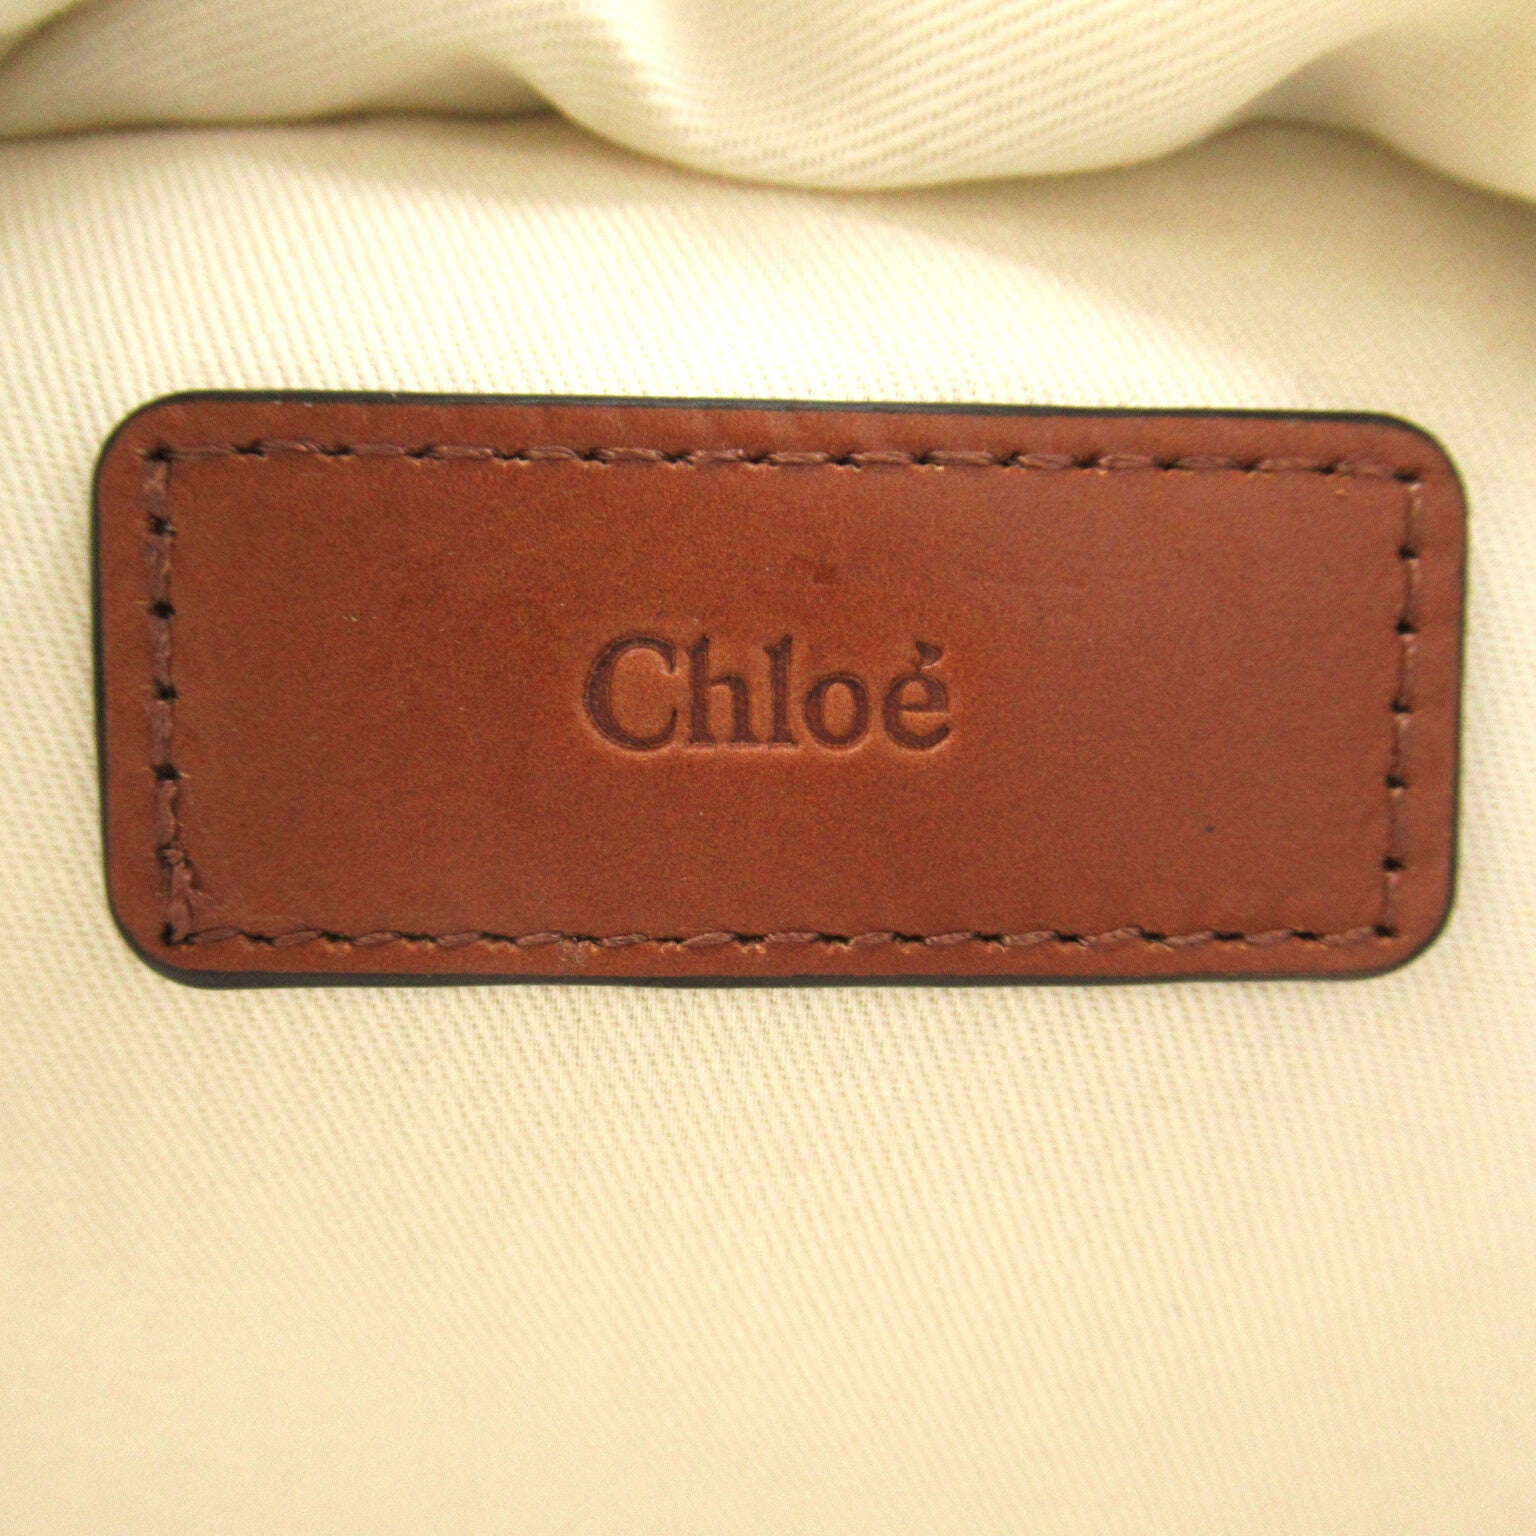 Chloe Backpack Backpack Bag Denim  Blue C20044Z10